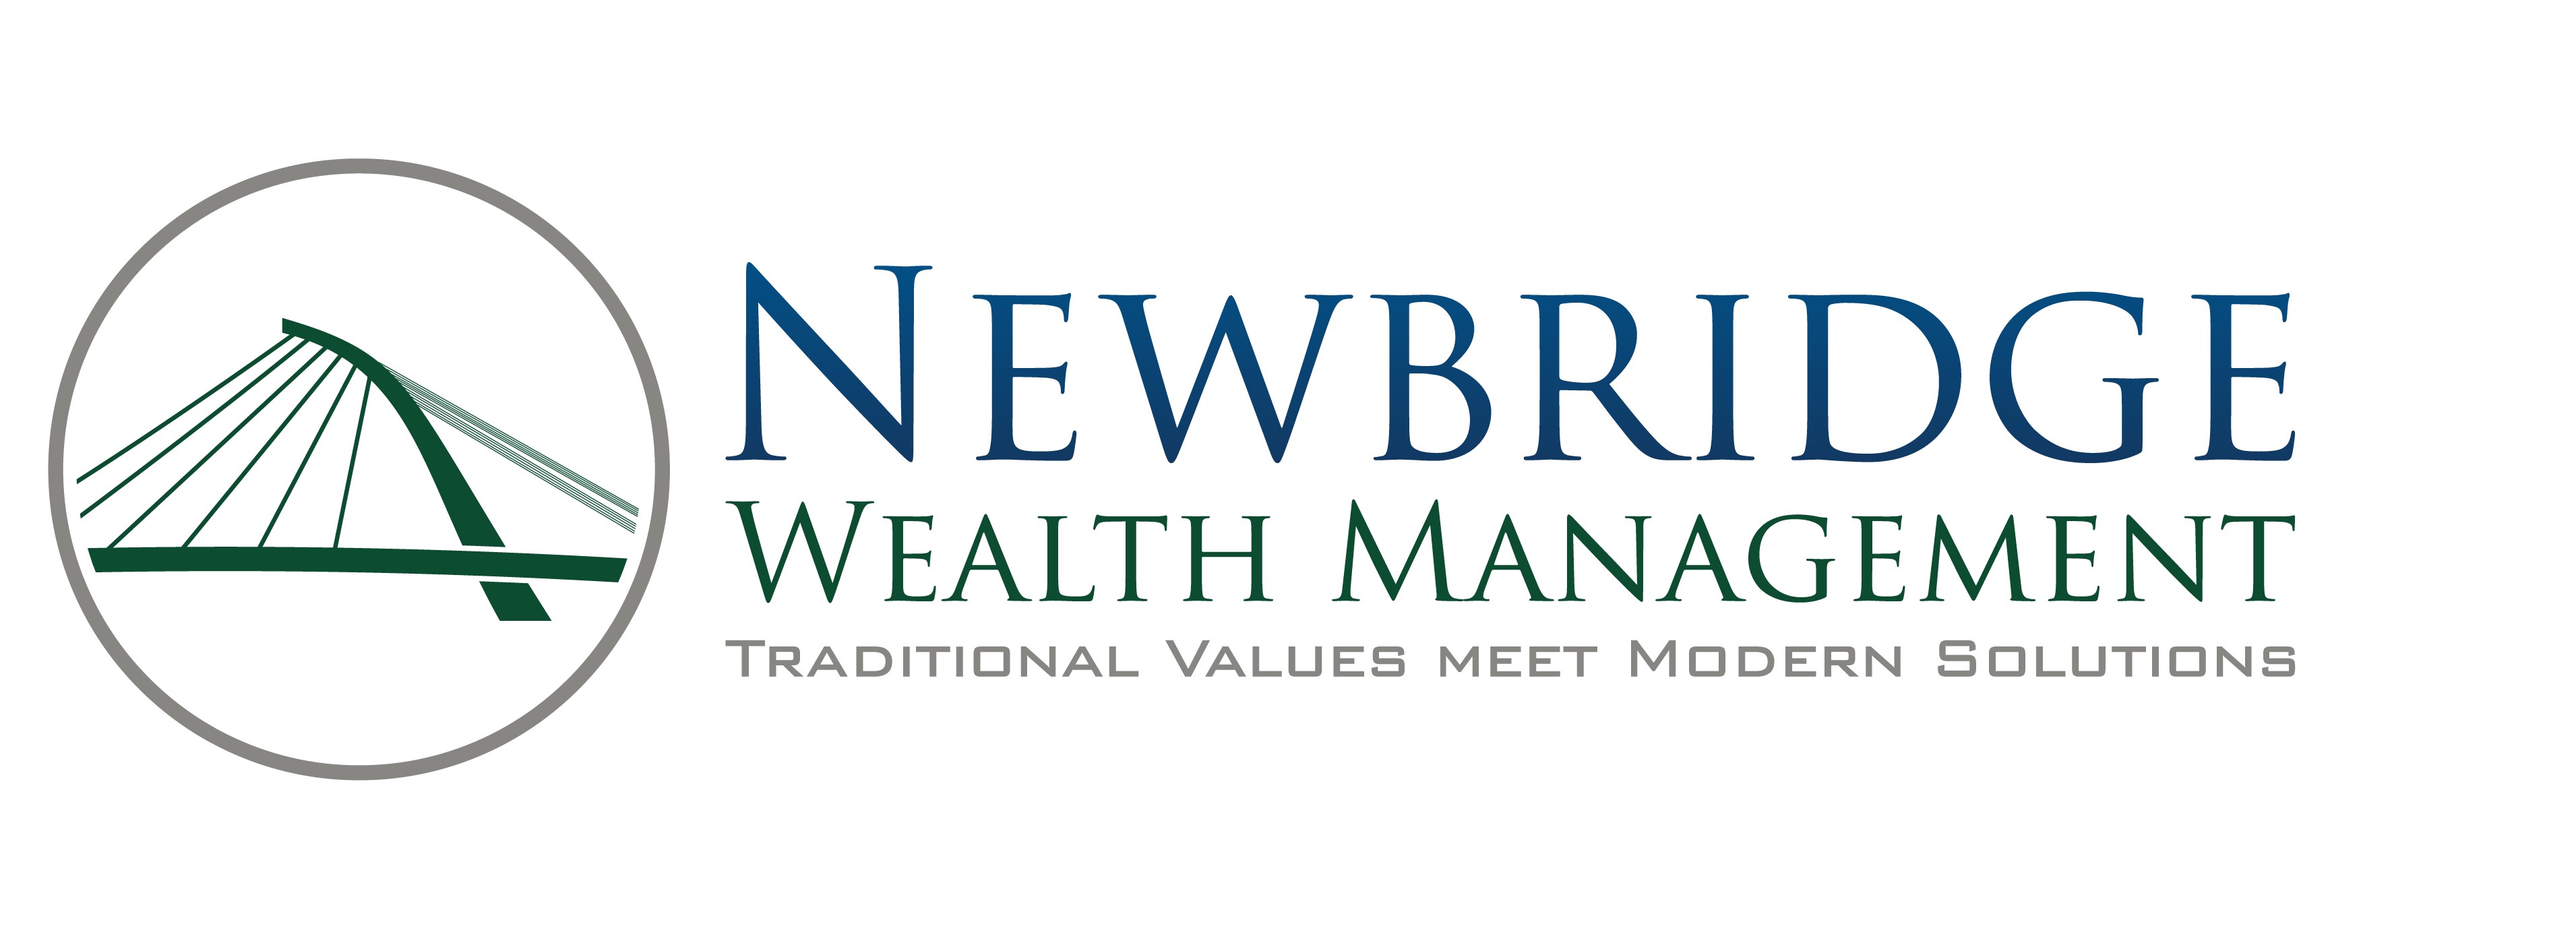 Newbridge Wealth Management